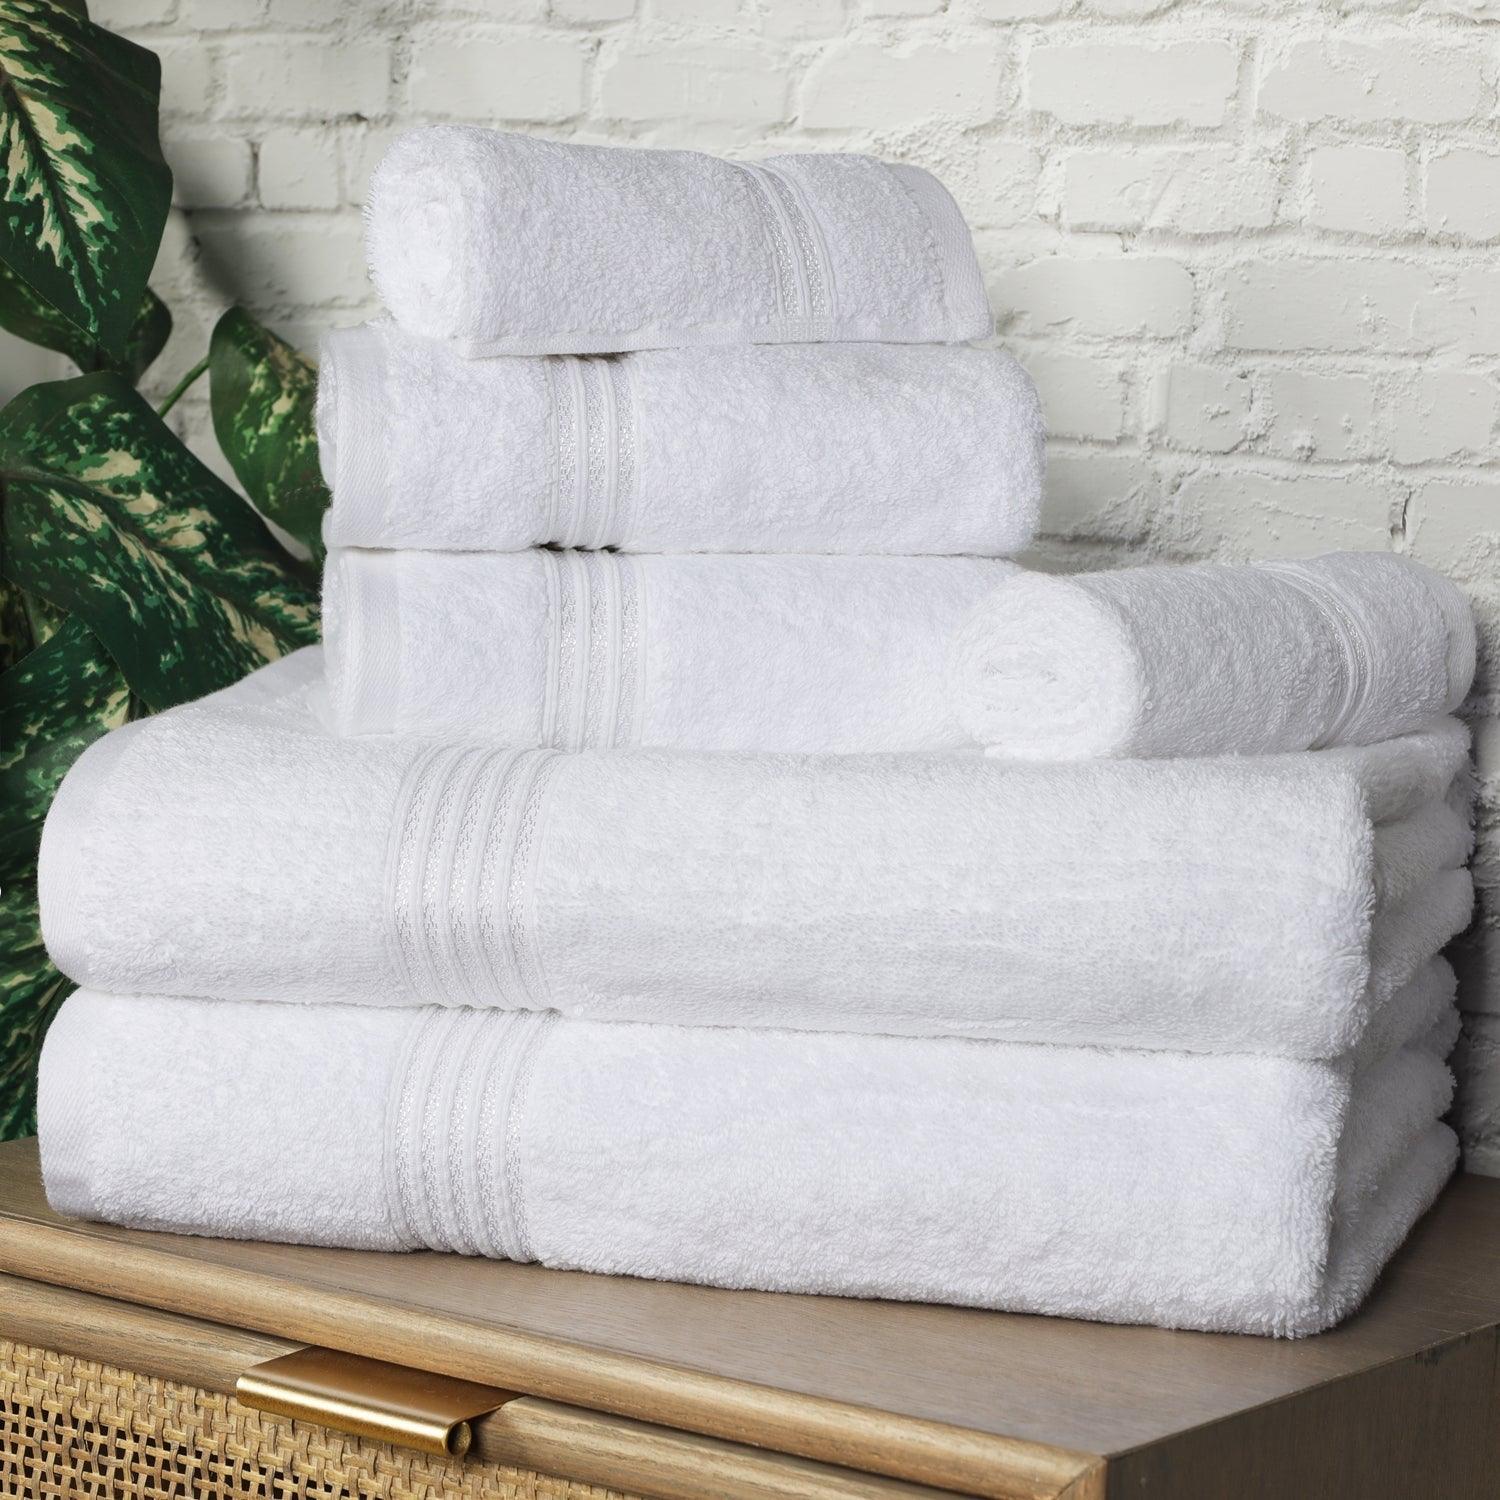 Egyptian Cotton 600 GSM, 6-Piece Towel Set, 2 Bath, 2 Hand, 2 Face FredCo